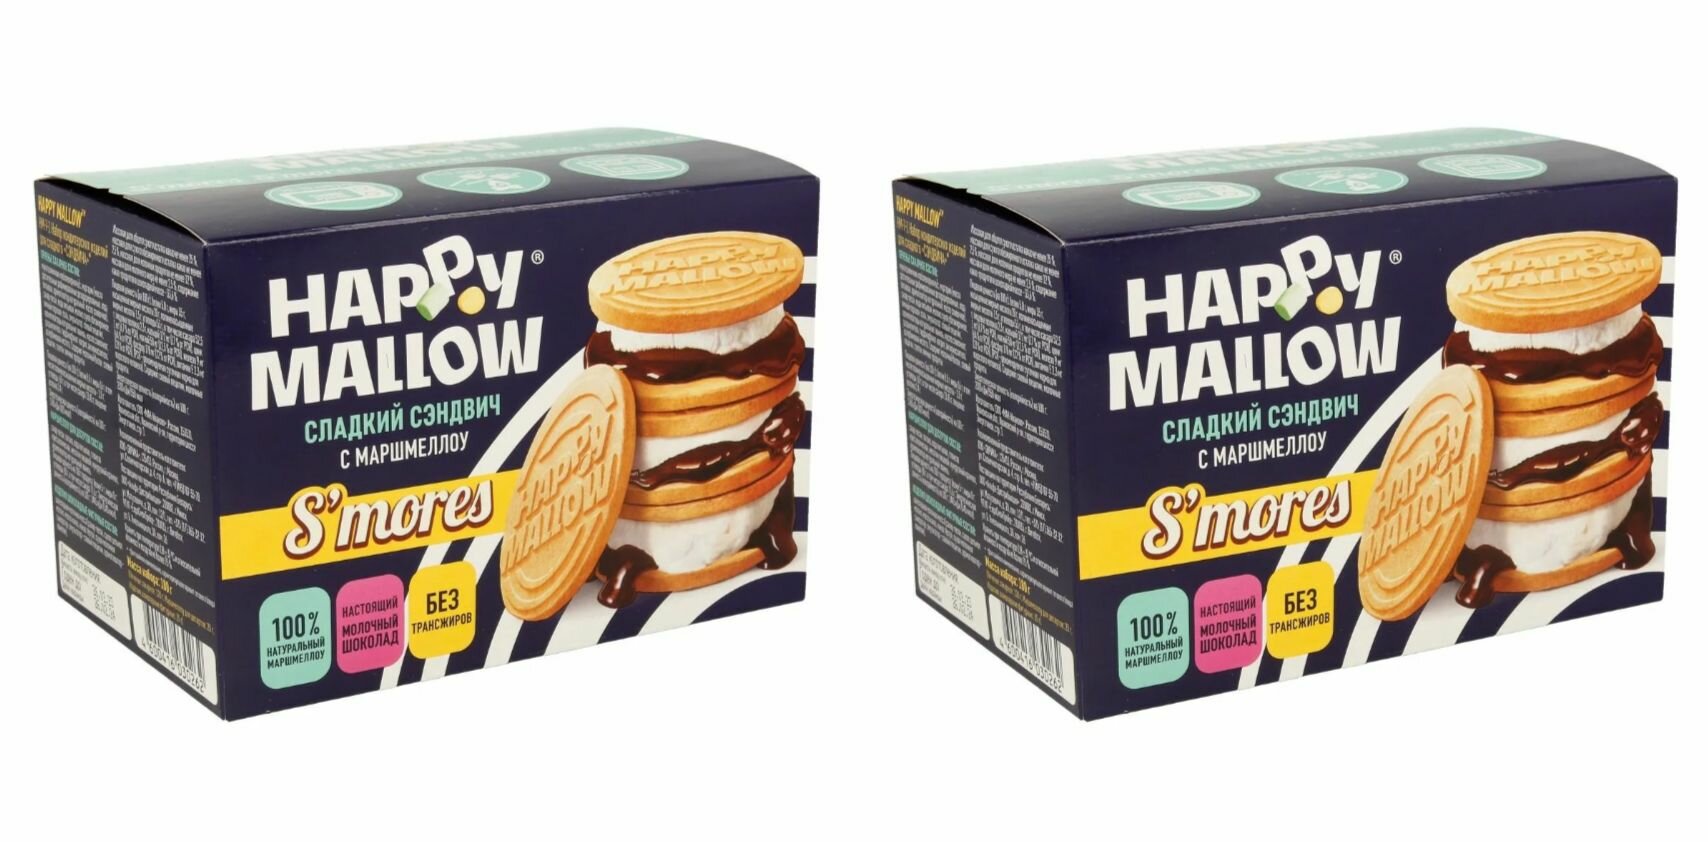 Happy Mallow Smores набор для сладкого сэндвича, 2шт. по 50гр